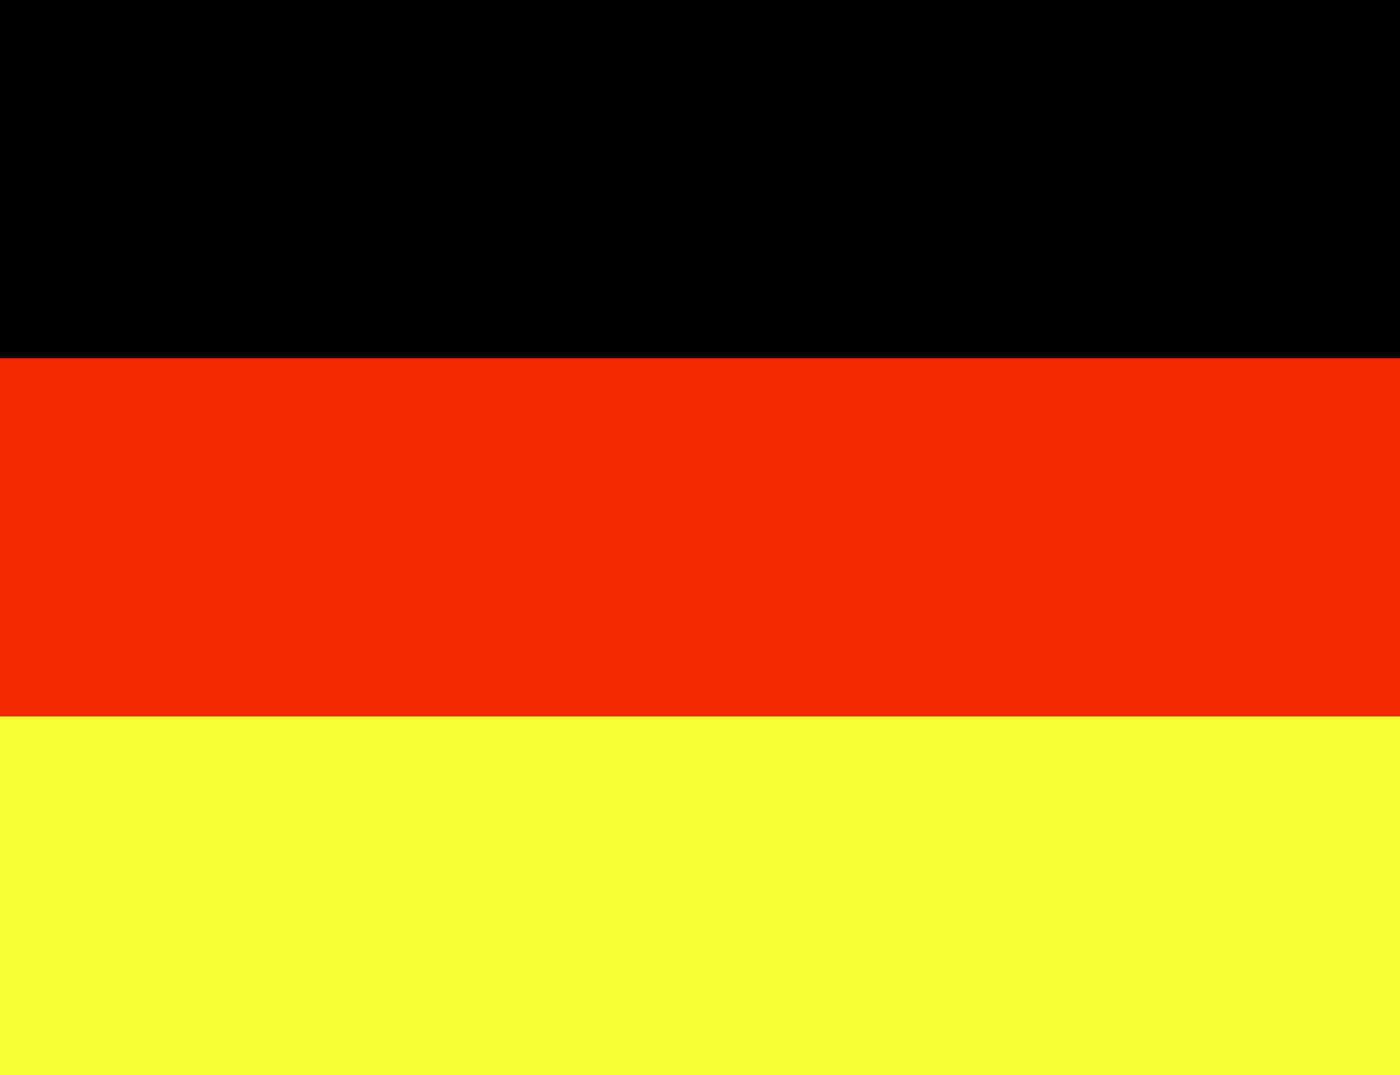 Graafix Germany Flag Wallpapers HD Wallpapers Download Free Images Wallpaper [wallpaper981.blogspot.com]